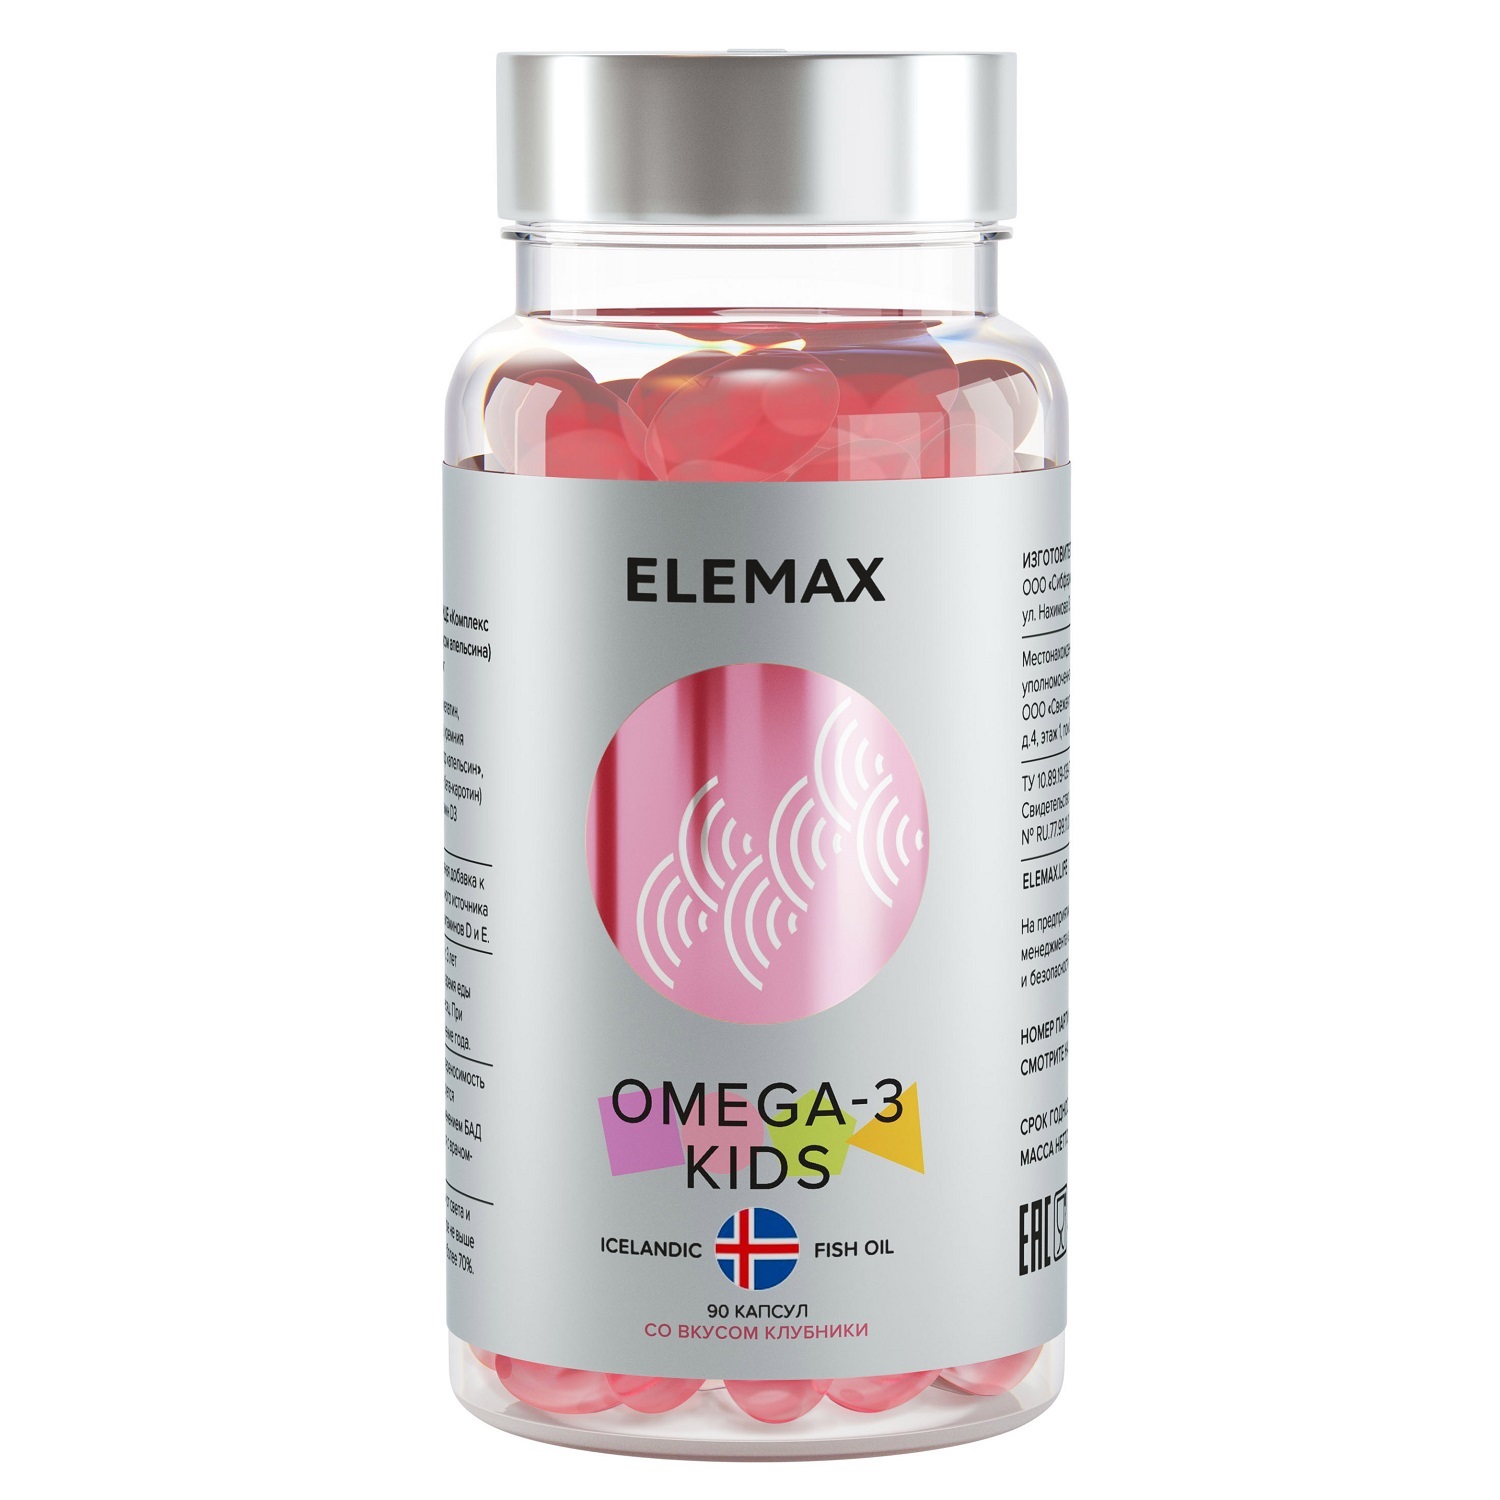 Elemax Детский комплекс Omega-3 Kids с витаминами Е и Д и вкусом клубники, 90 жевательных капсул (Elemax, ) омега 3 эпк 180мг дгк 120мг now omega 3 enteric 90 капсул для мозга иммунитета сосудов зрения кожи